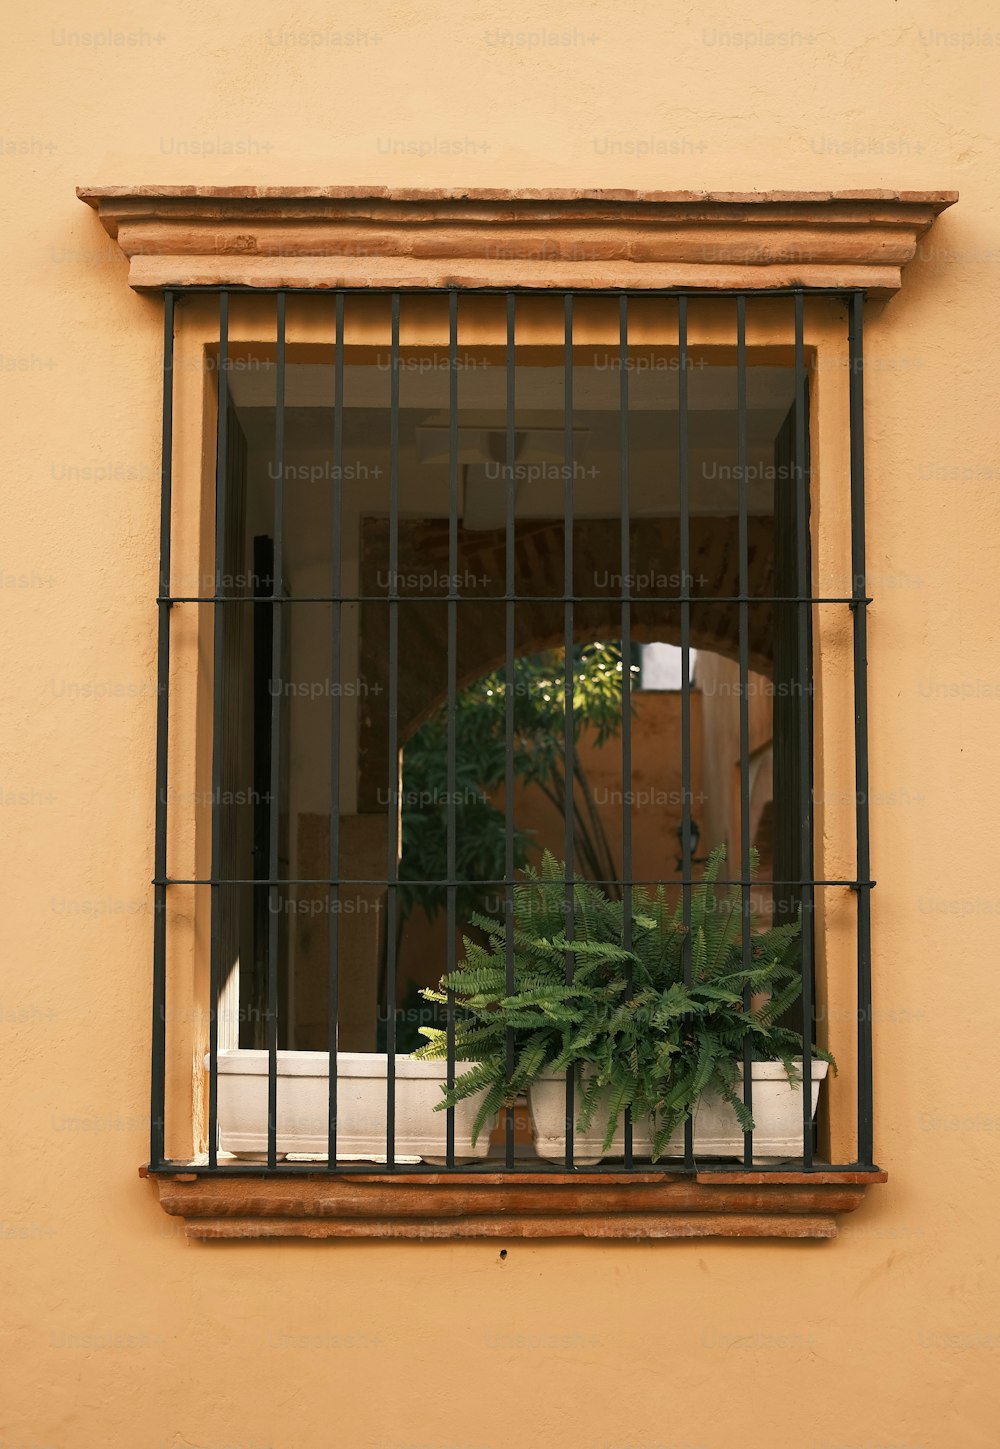 una pianta in vaso seduta in un davanzale della finestra